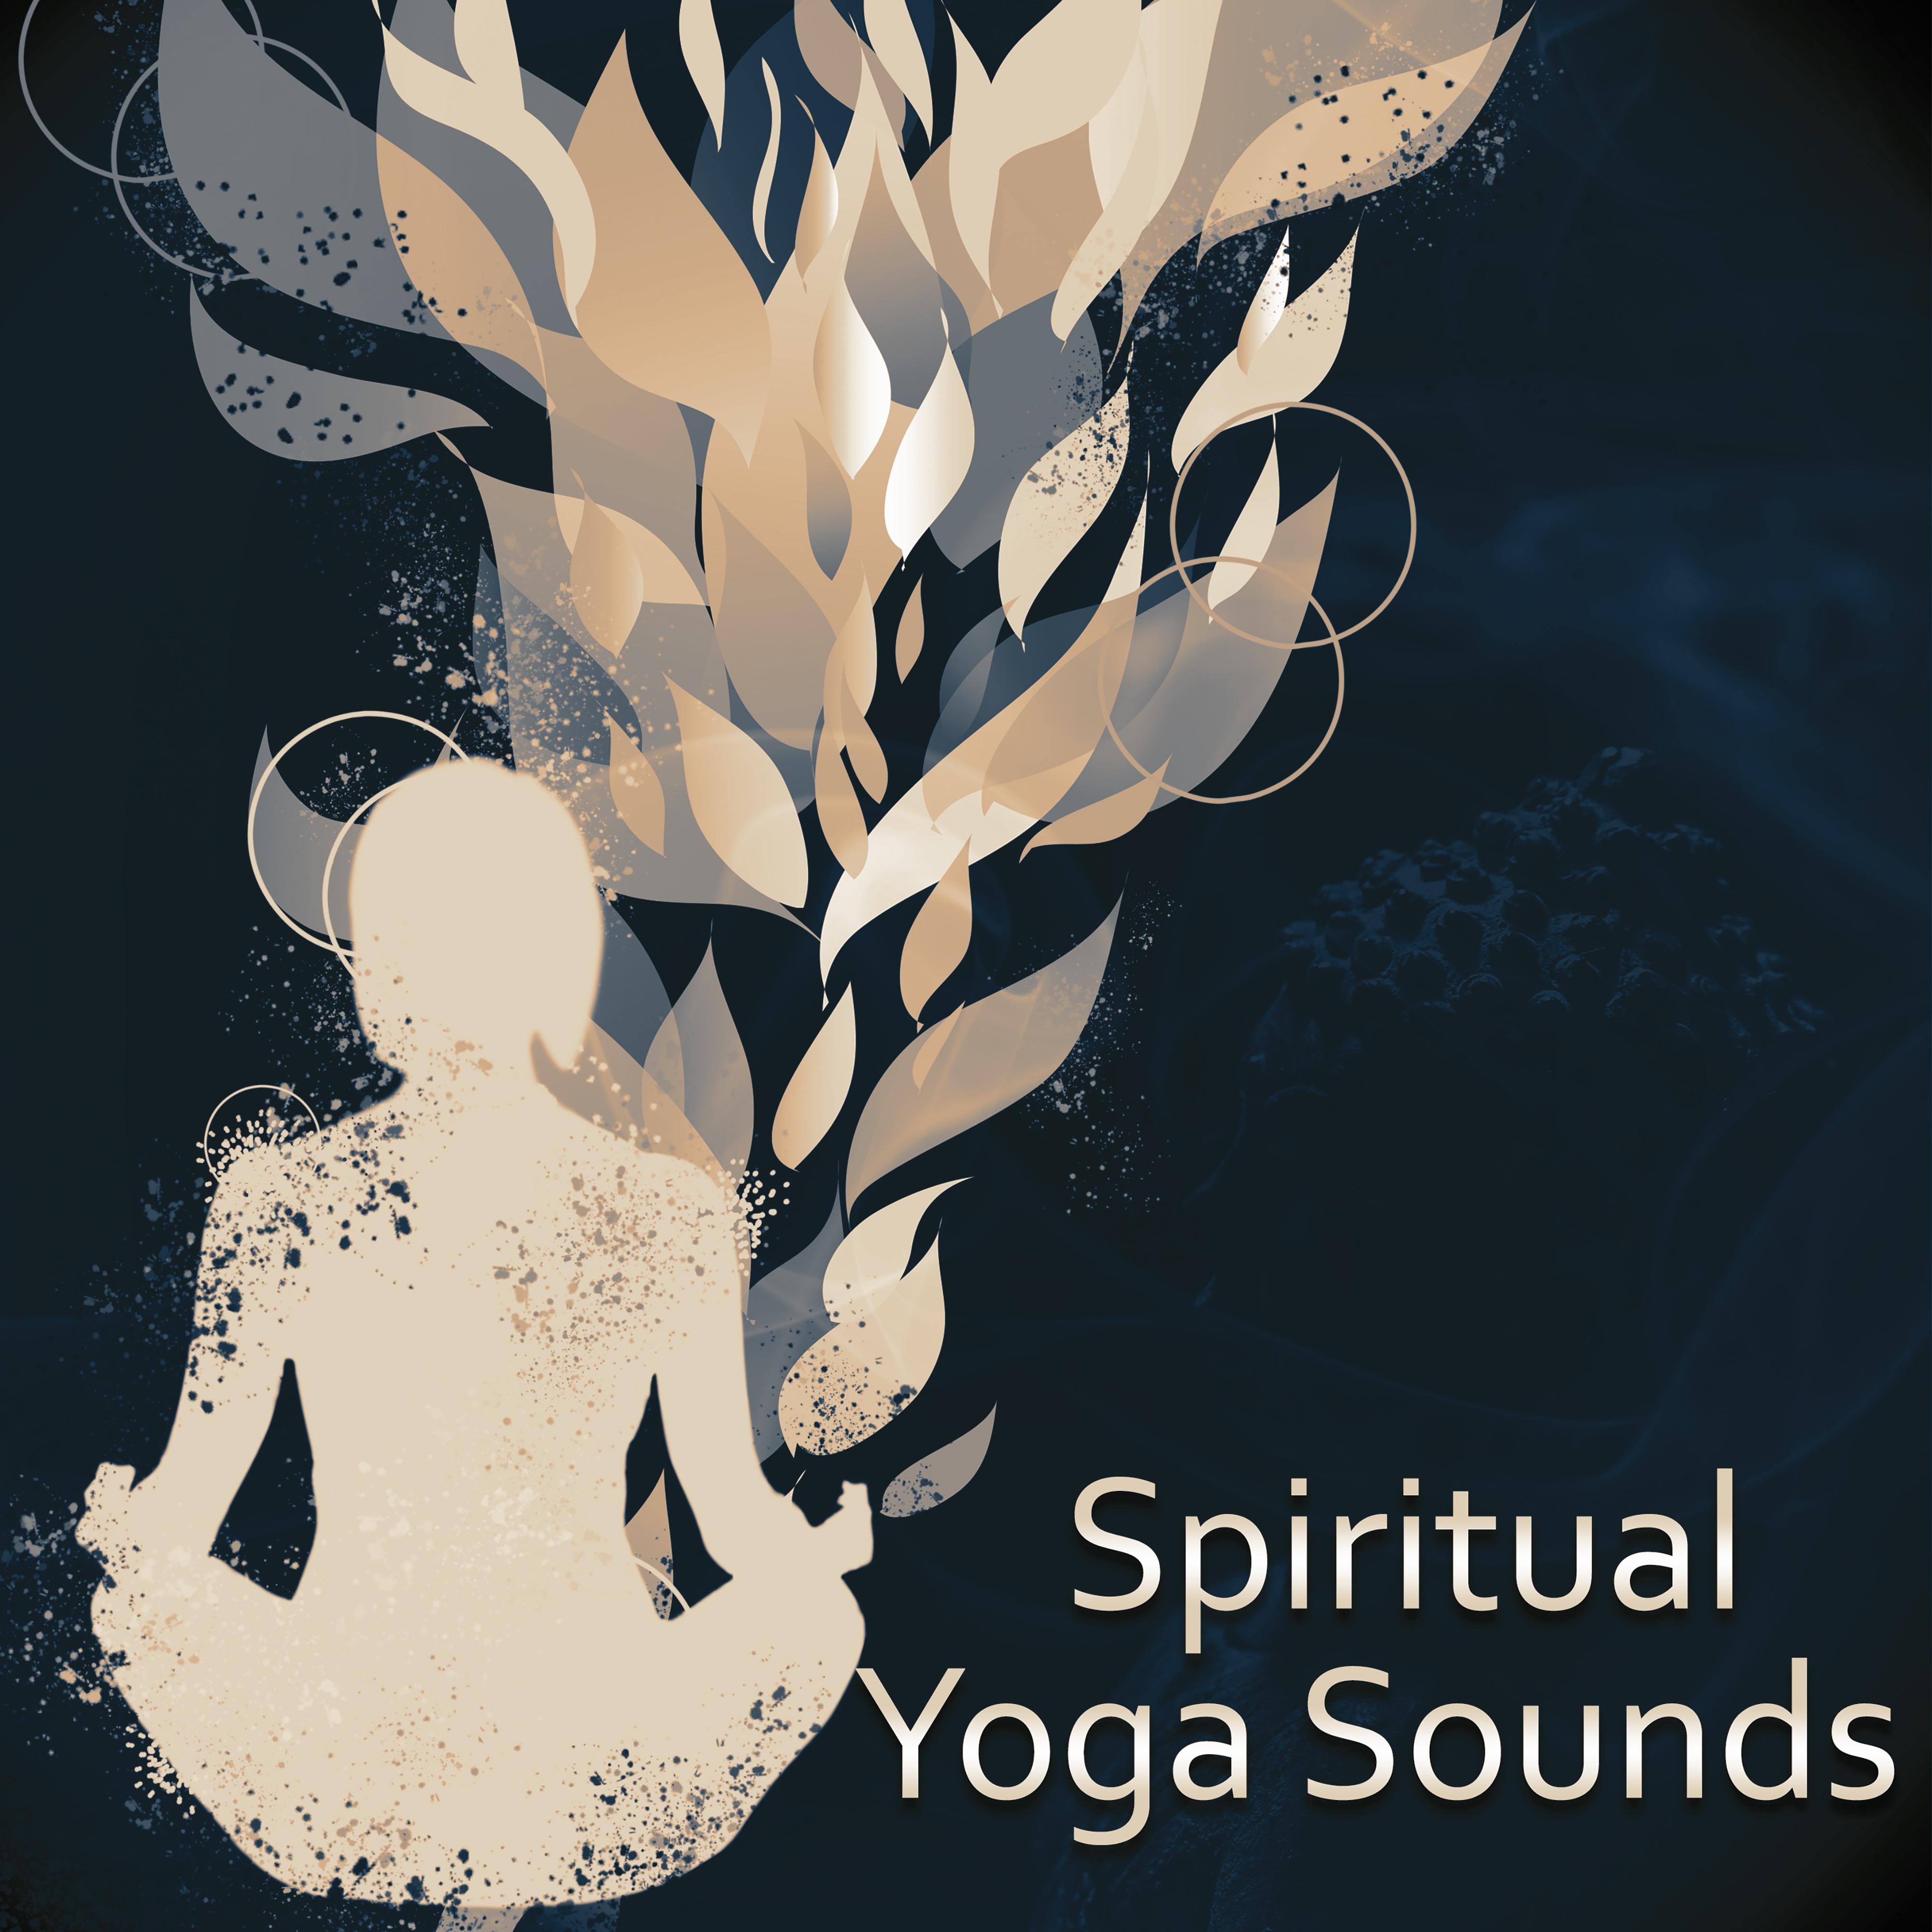 Spiritual Yoga Sounds  Melodies for Meditation, Tantra Massage, Deep Sleep, Yoga Healing, Concentration  Calmness